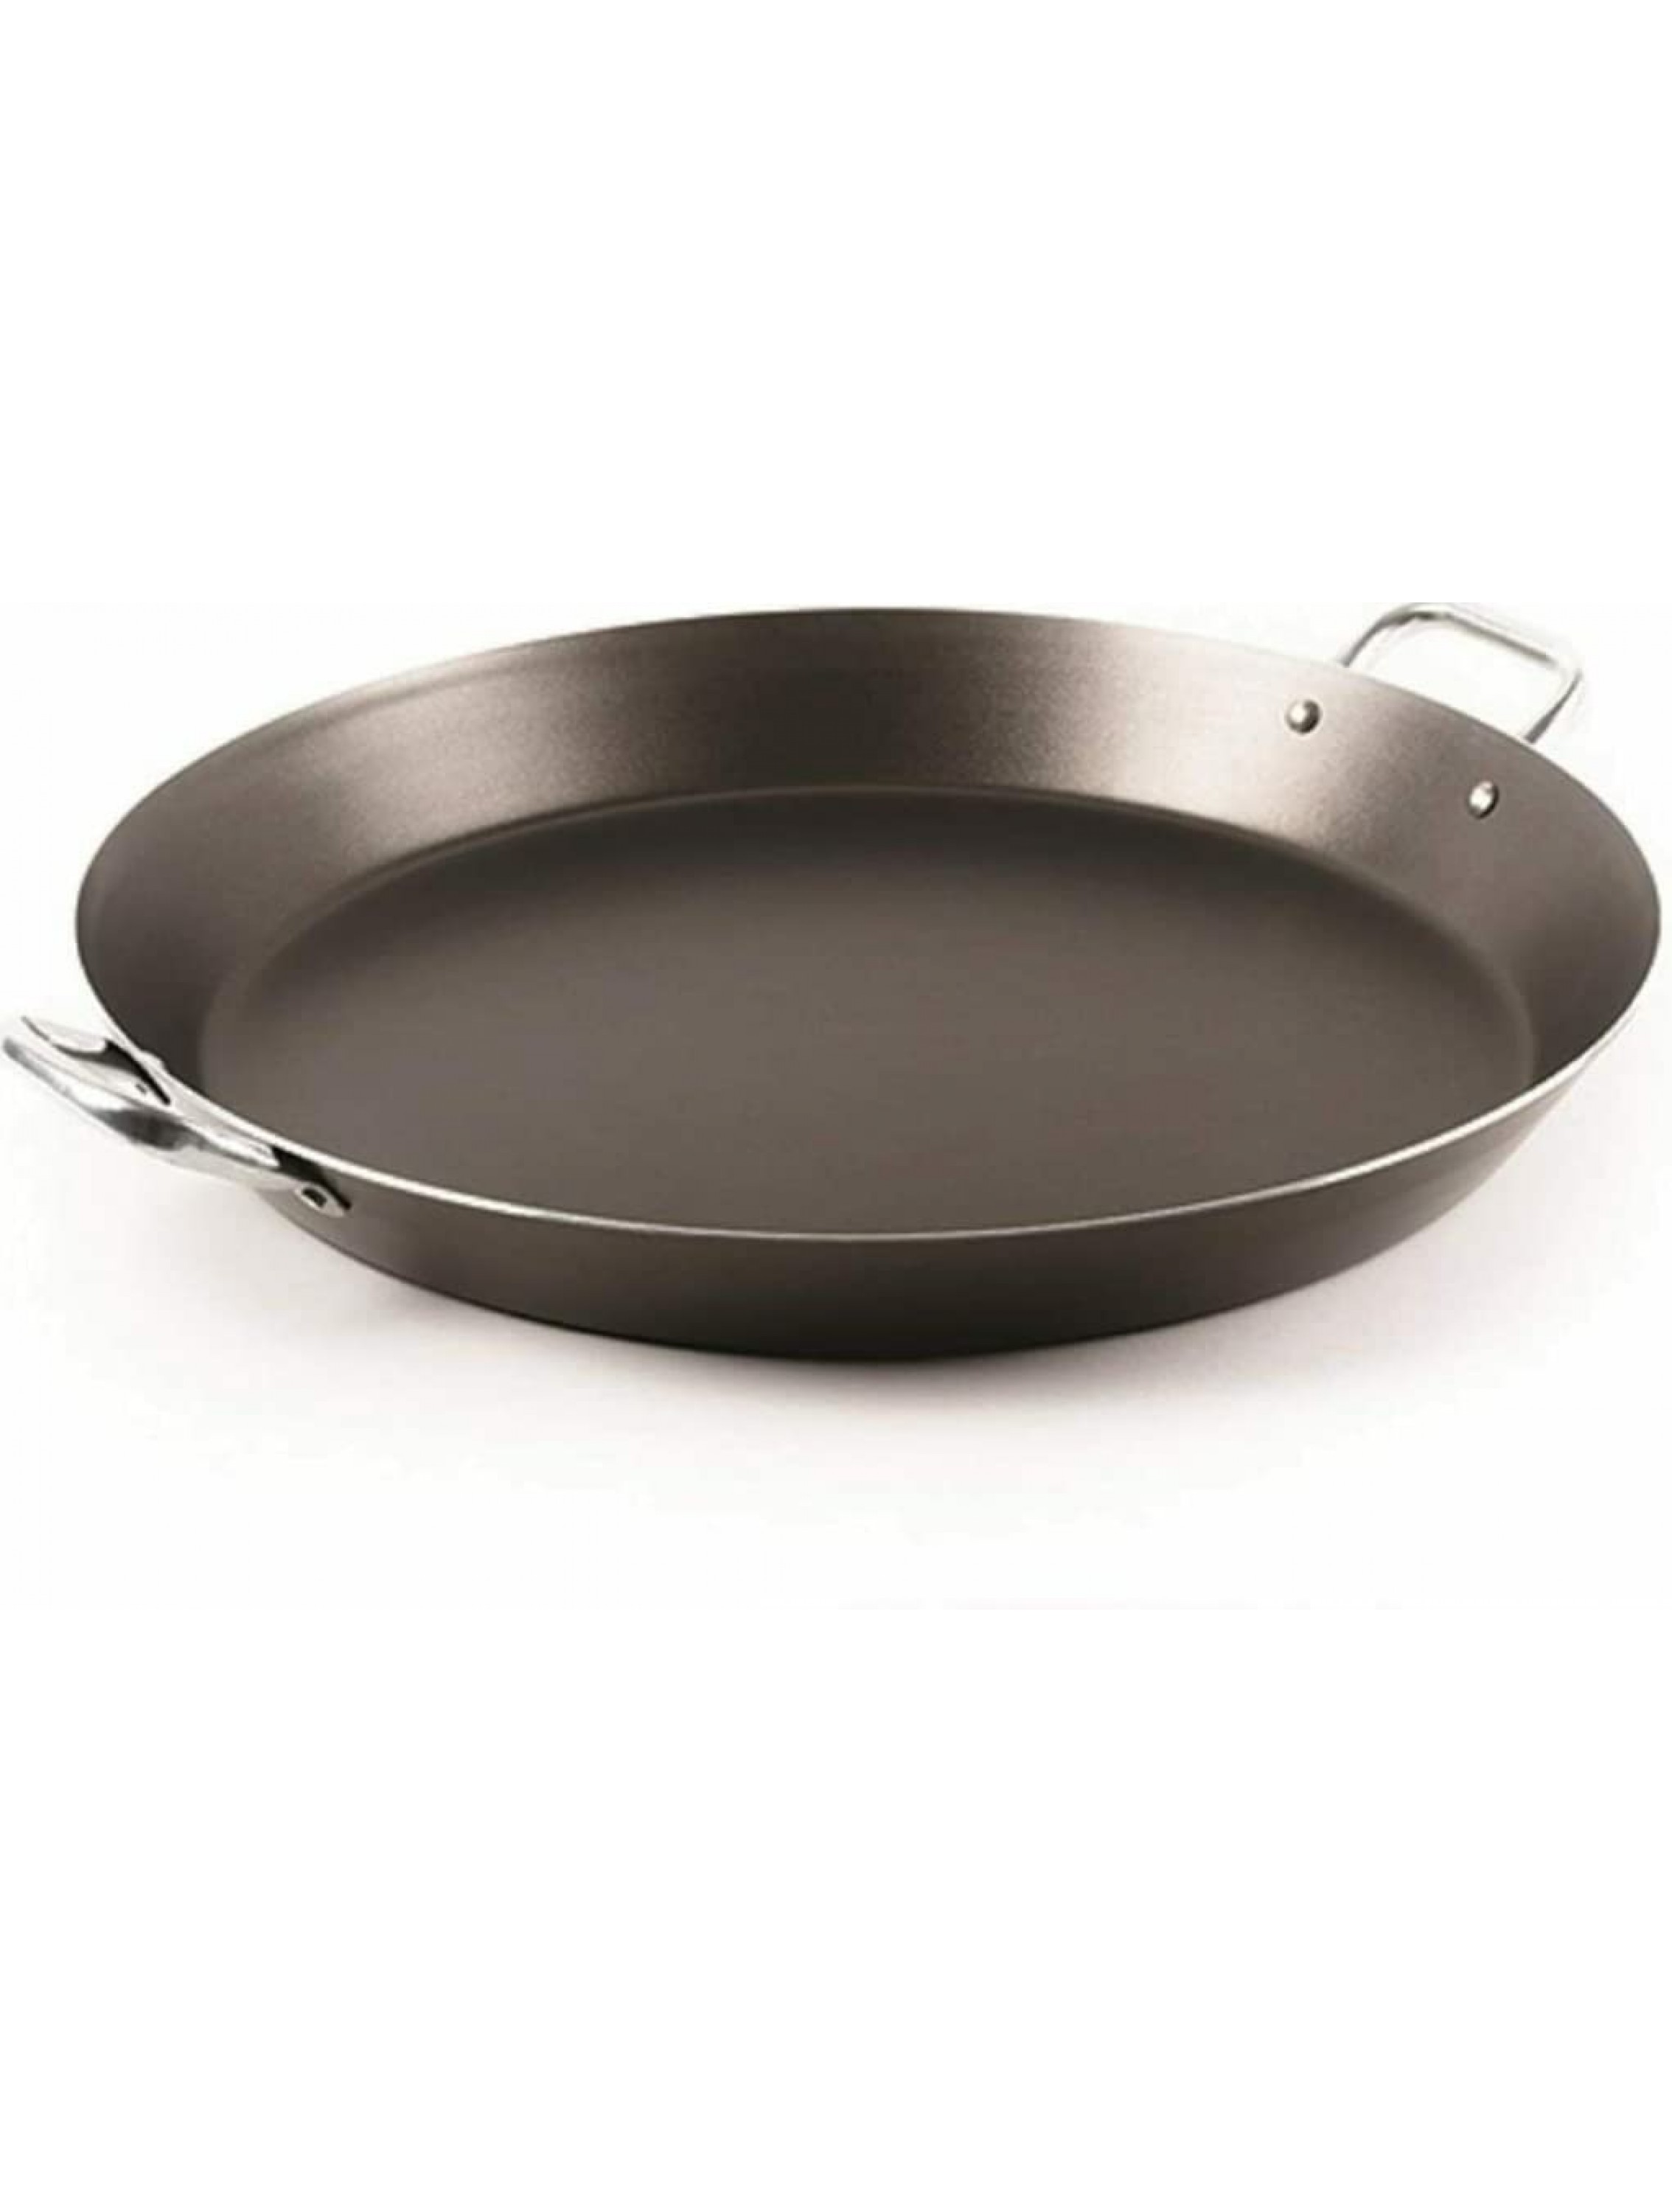 Non Stick Aluminum Paella Pan 13.4 15 16.5 18.1 Black Color Get 1 Pcs Frying Pan #UNW01YN 4803 46 18.1 - BO3T0WVQ0